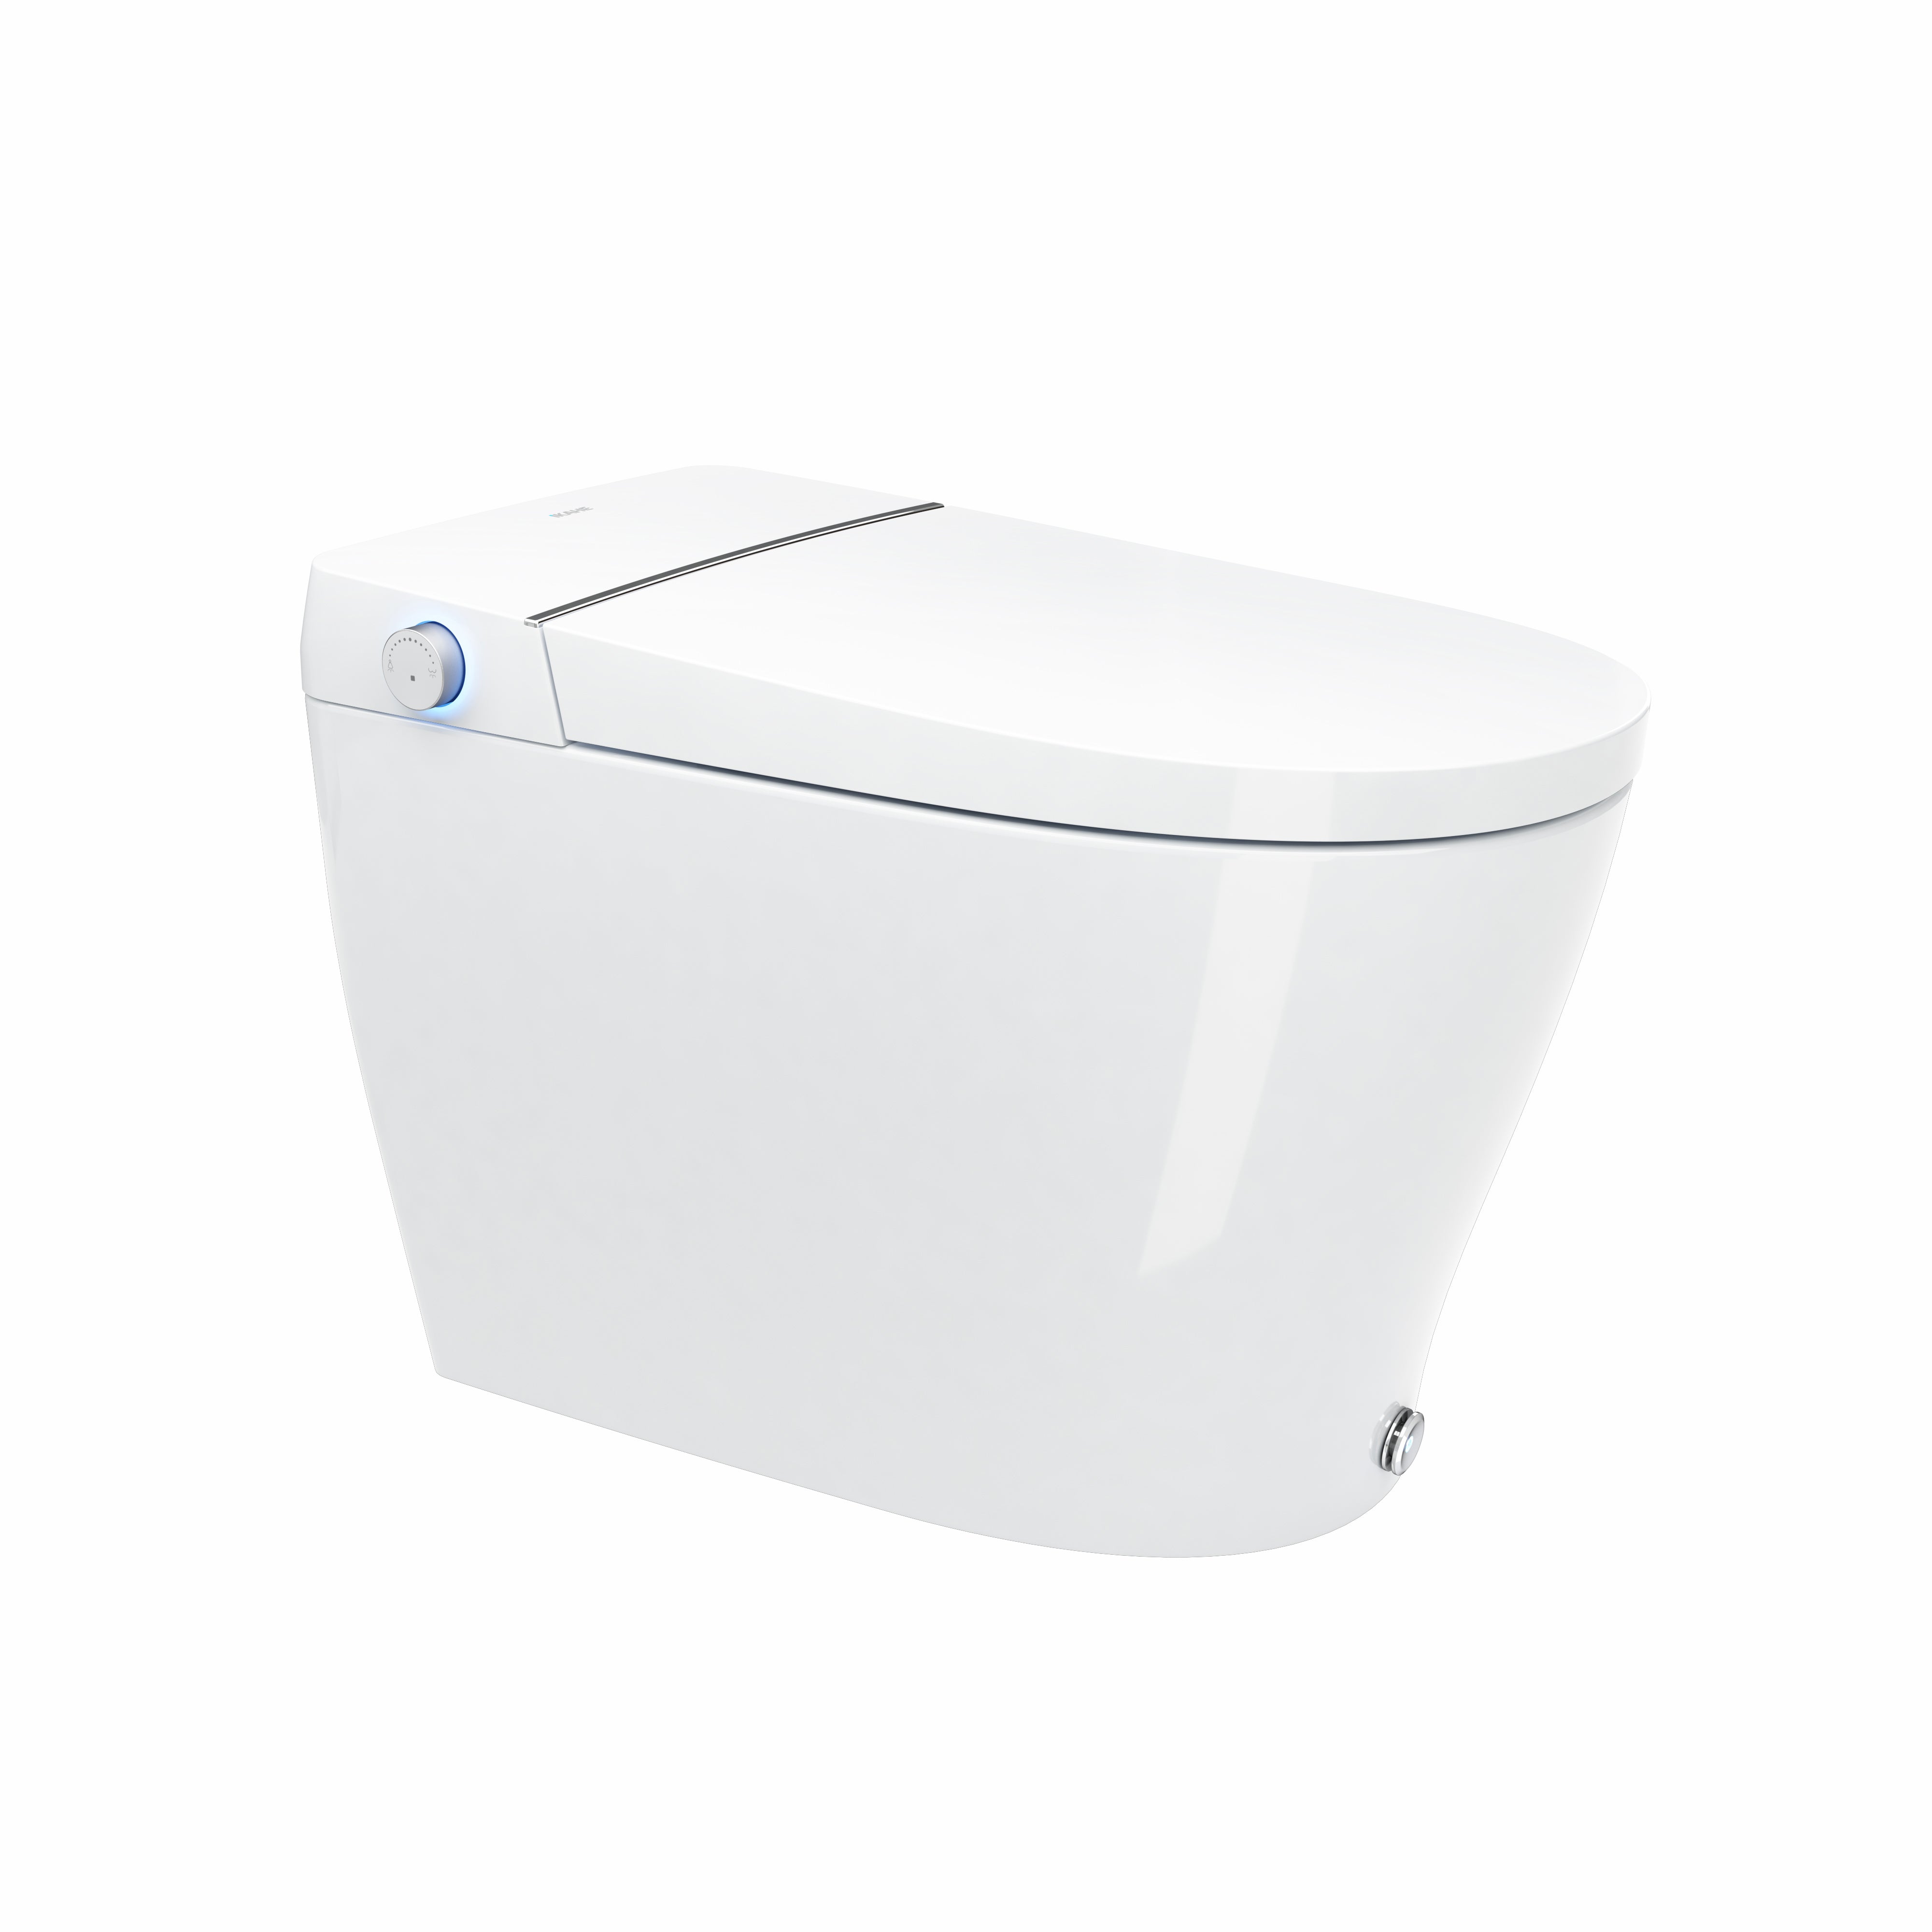 Lux Smart Toilet